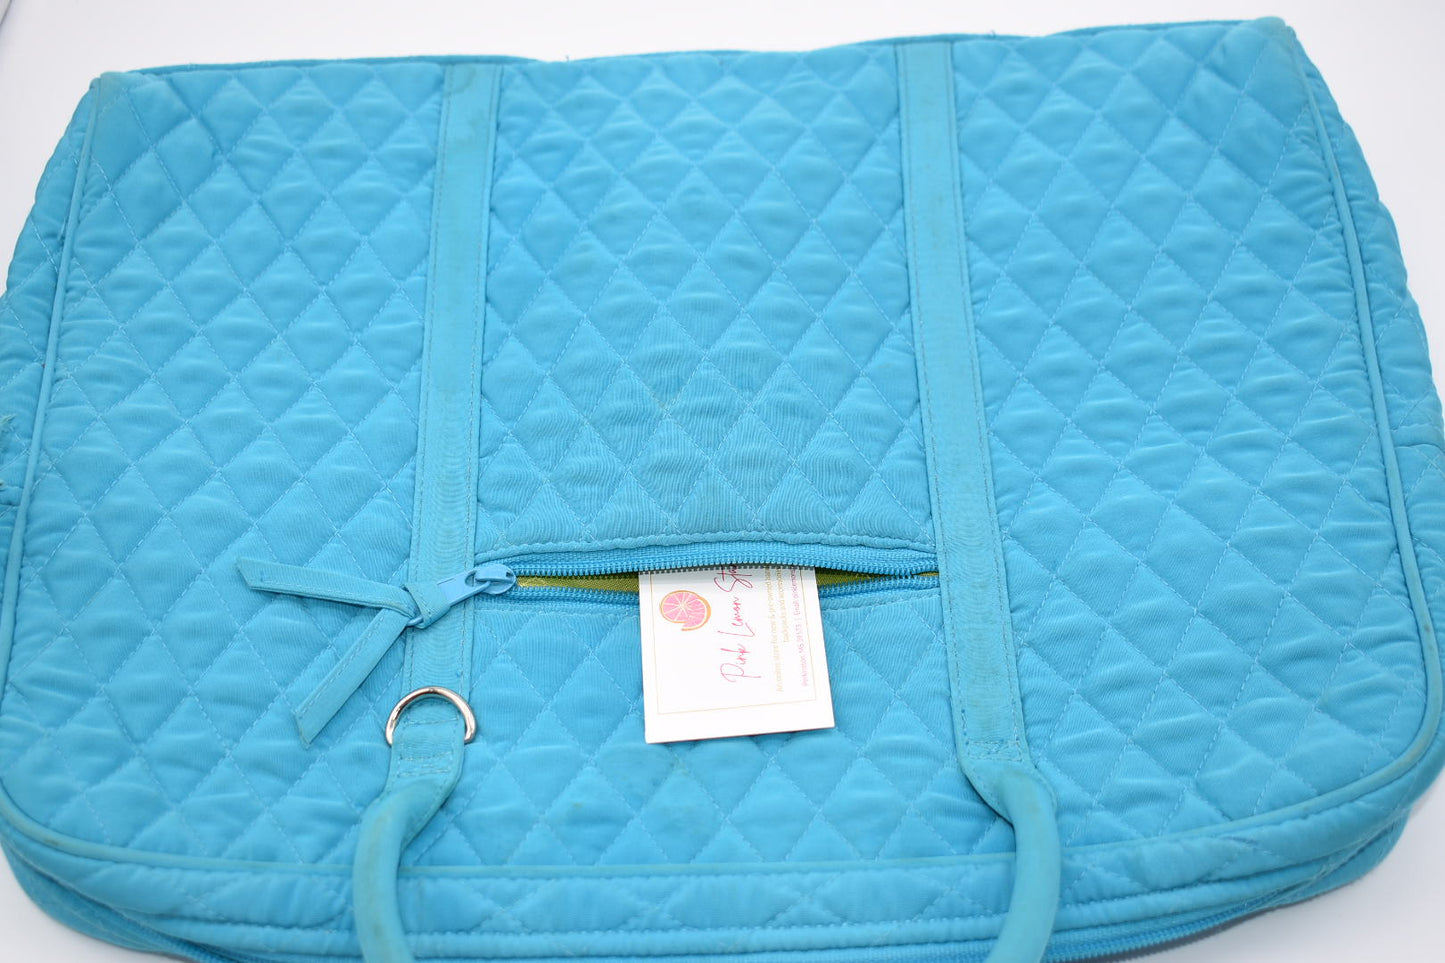 Vera Bradley Laptop Briefcase Bag in Microfiber Blue